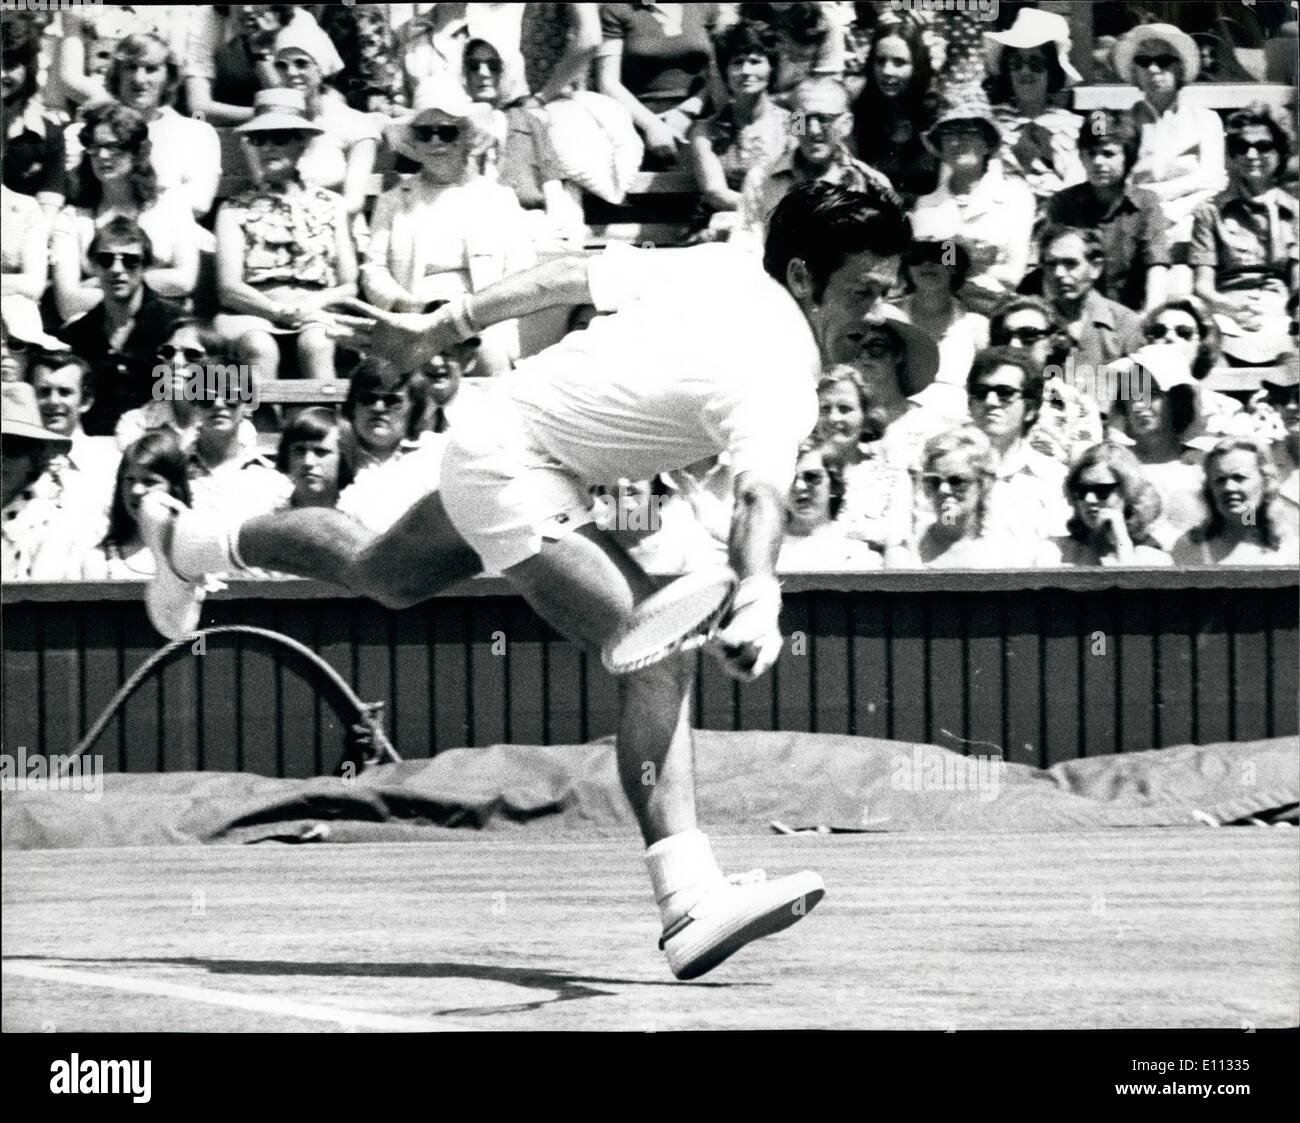 Giugno 06, 1975 - Wimbledon Tennis campionati. Africana V. ROSEWALL. foto mostra:- Ken ROSEWALL (Australia) in gioco ancora Foto Stock